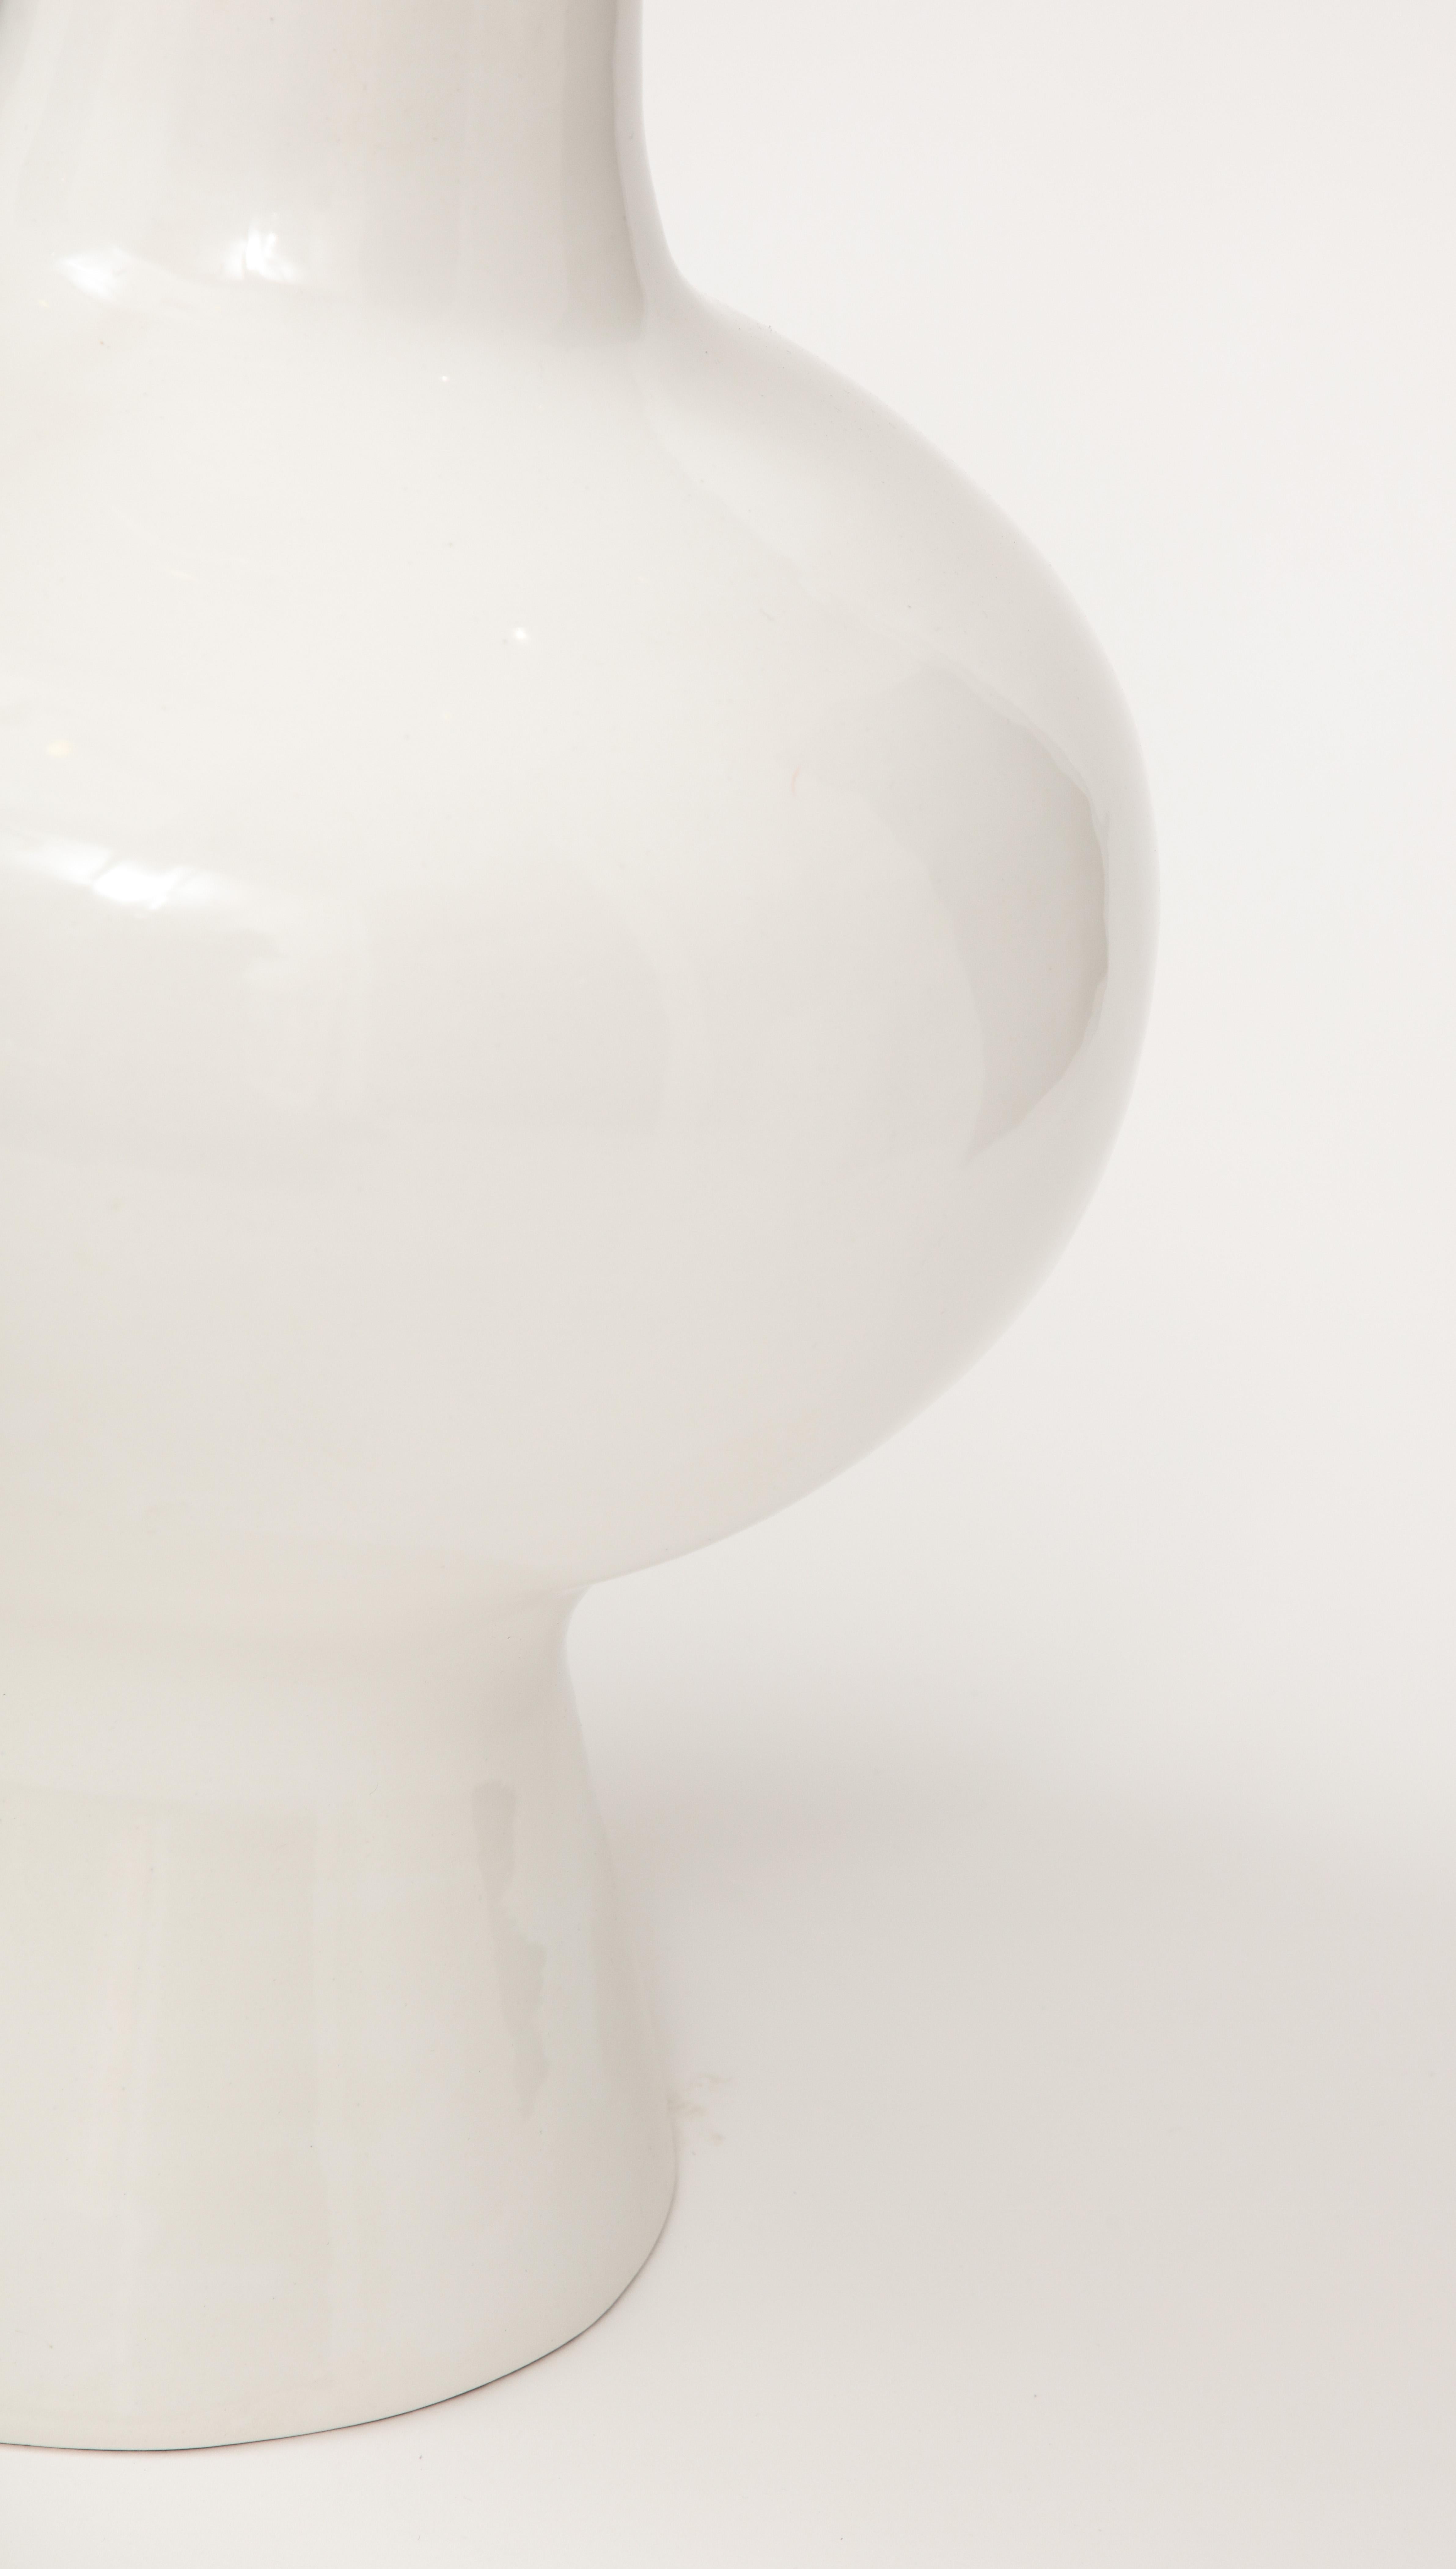 Large Scale Italian White Ceramic Lamp, 1960's For Sale 8